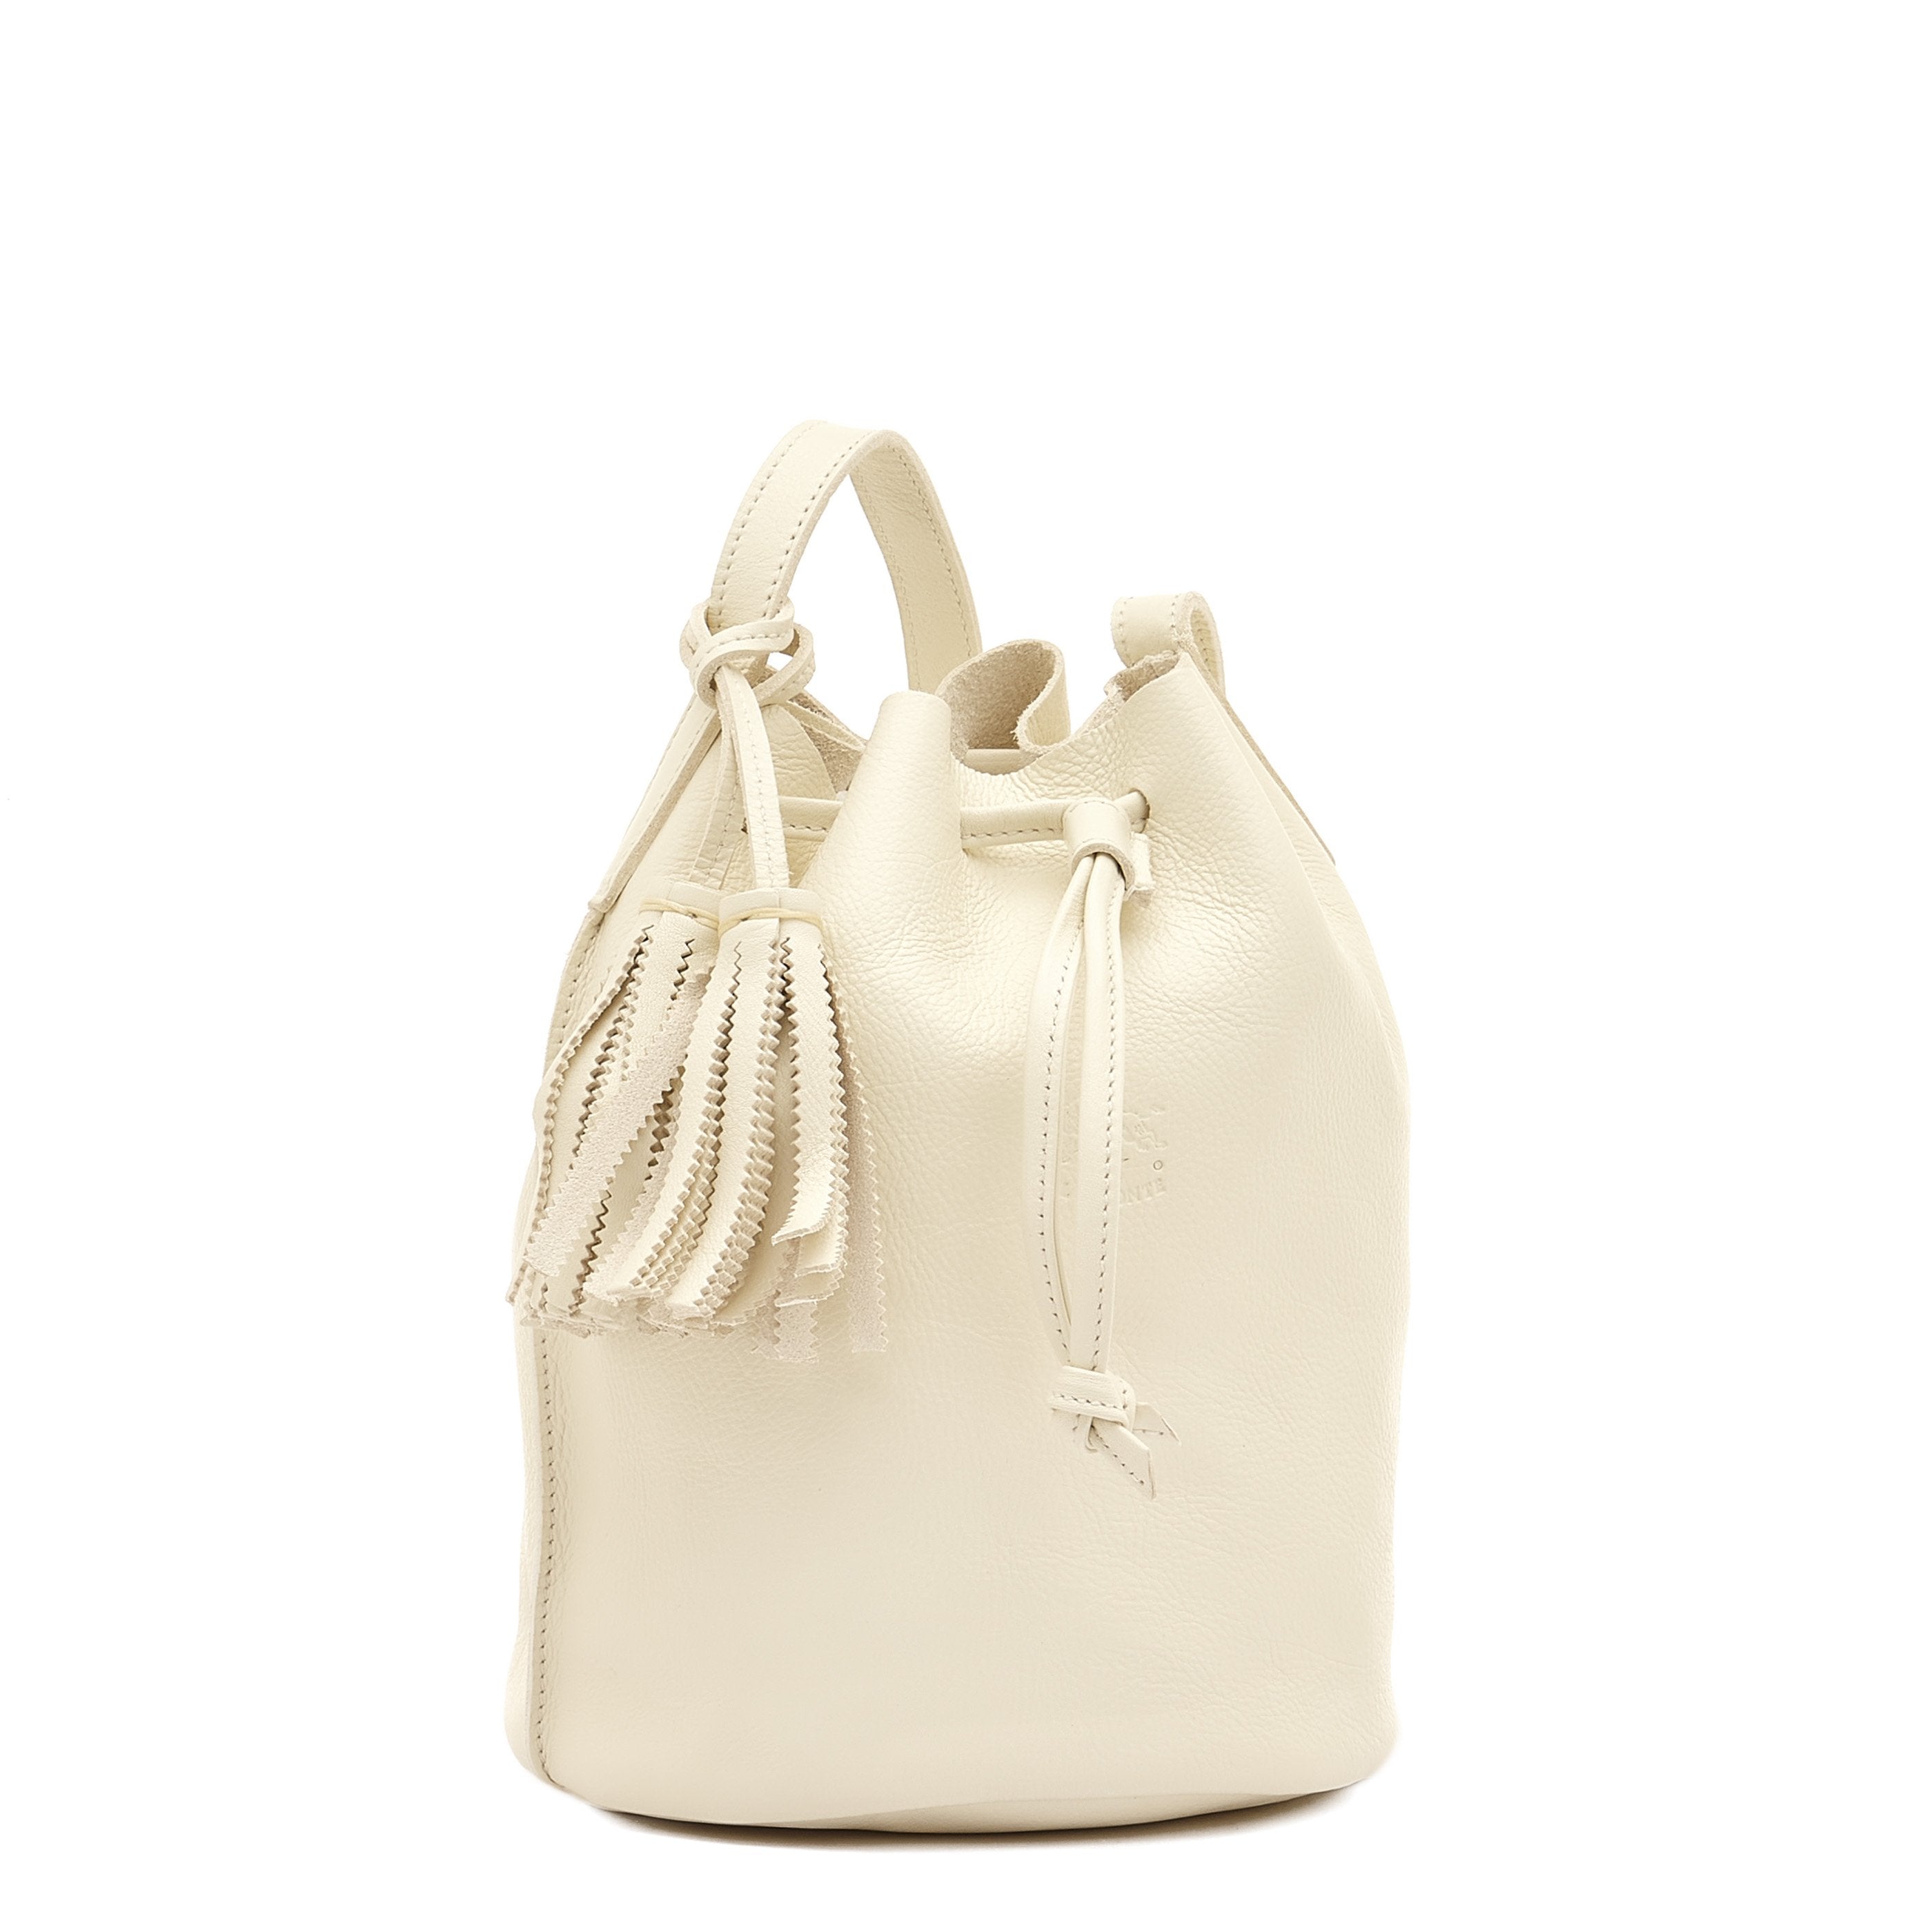 Silvia | Women's bucket bag in leather color milk